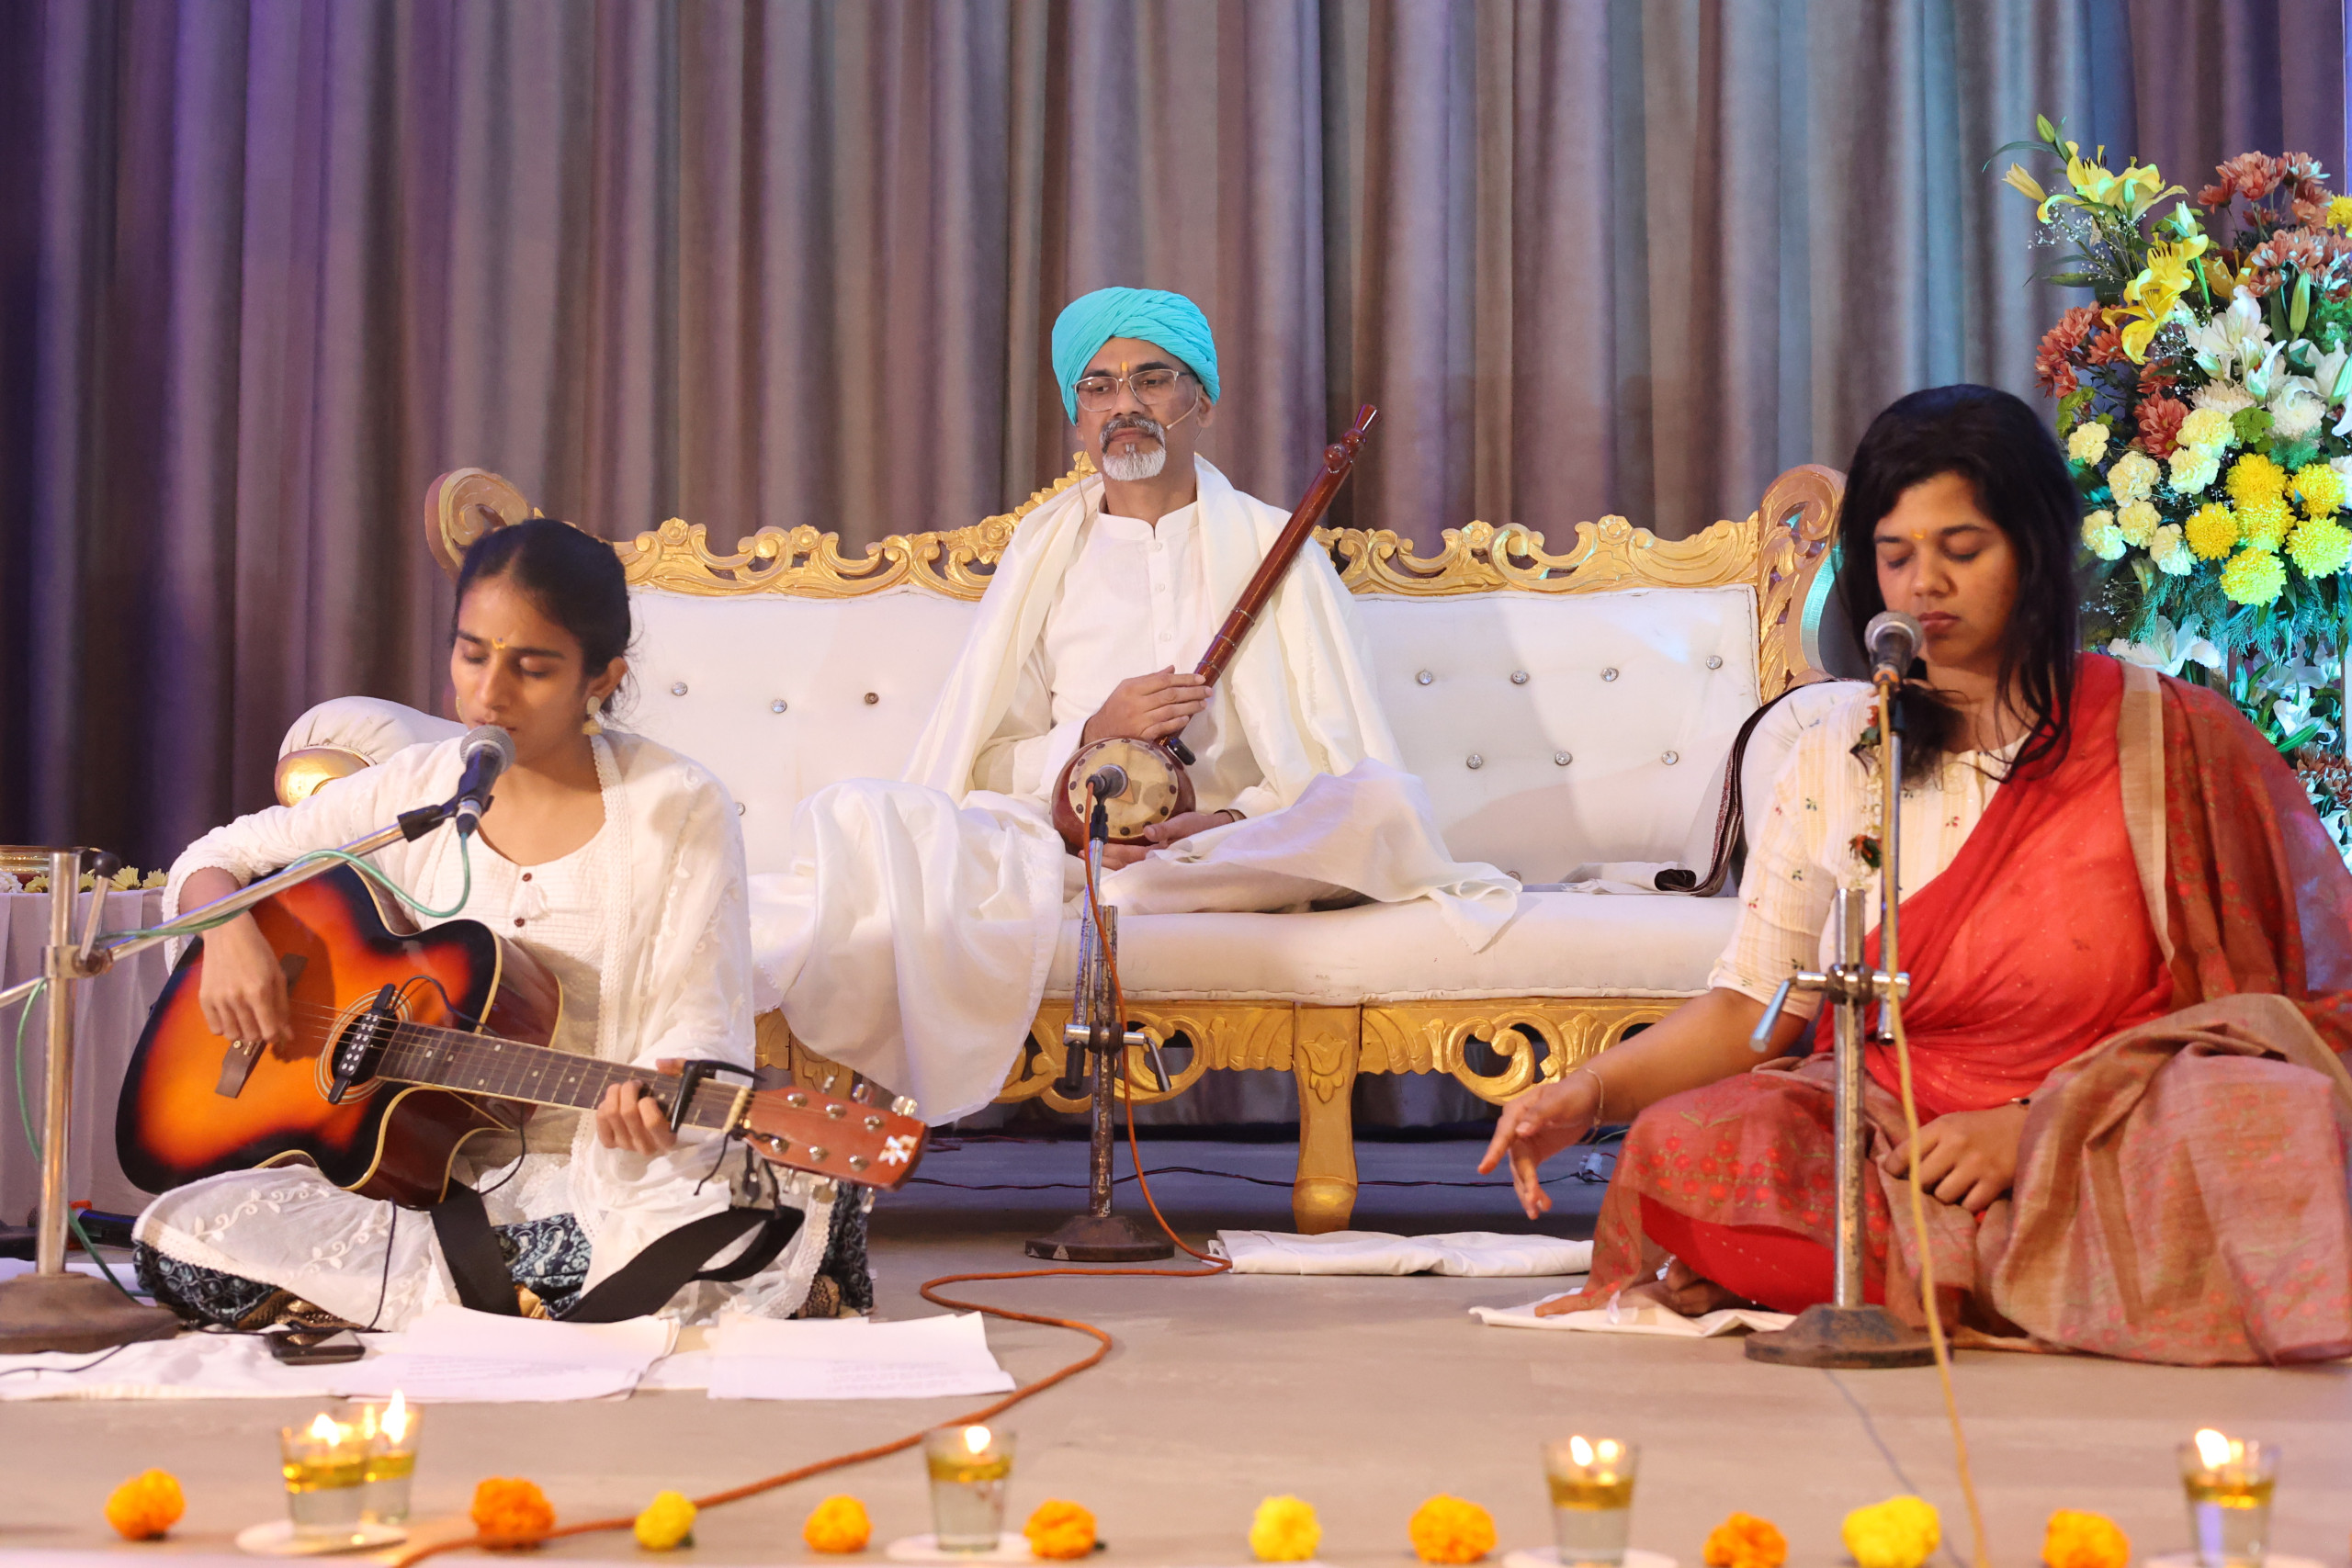 Siddha Kirtan with Vibhushri at Bodhmarga foundation healing musical instruments mahashivaratri fun event recreational shibir festival at Bodhmarga spiritual retreat event function